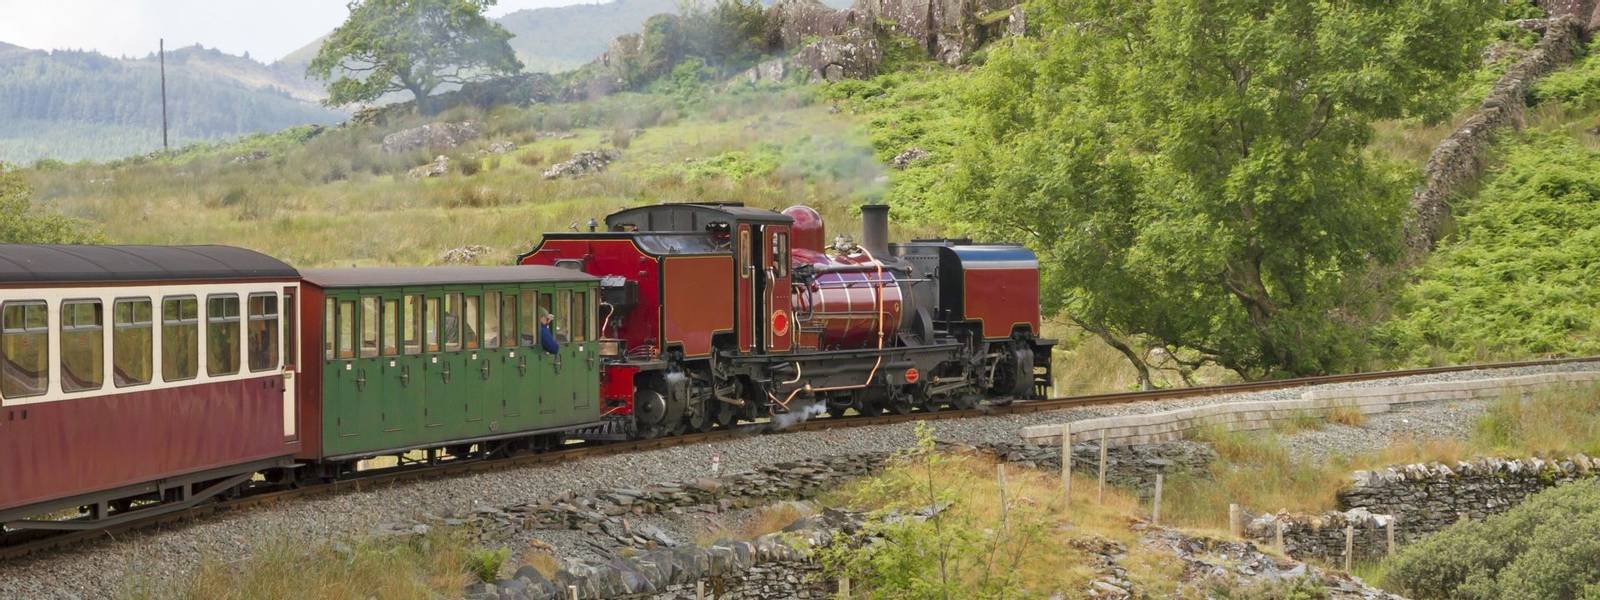 UK - Wales - Red steam locomotive (class garratt) pulls the old heritage train through Wales wilderness on Welsh Highland Ra…